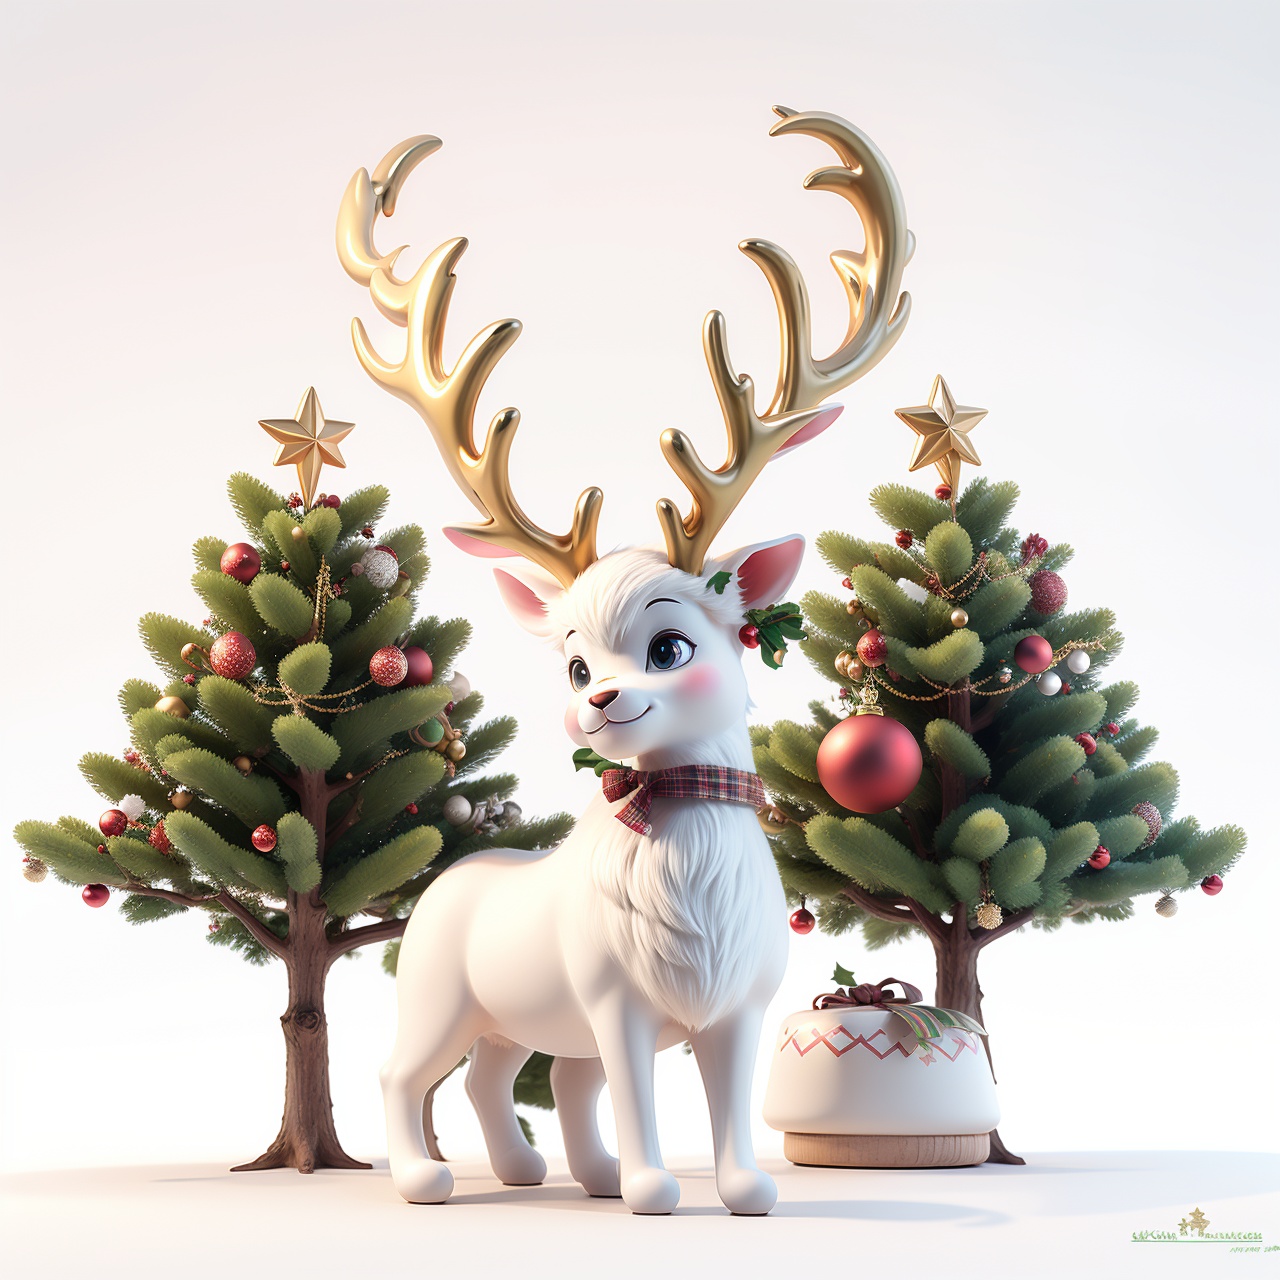 Masterpiece, best quality, minimalism, Christmas, reindeer, white background